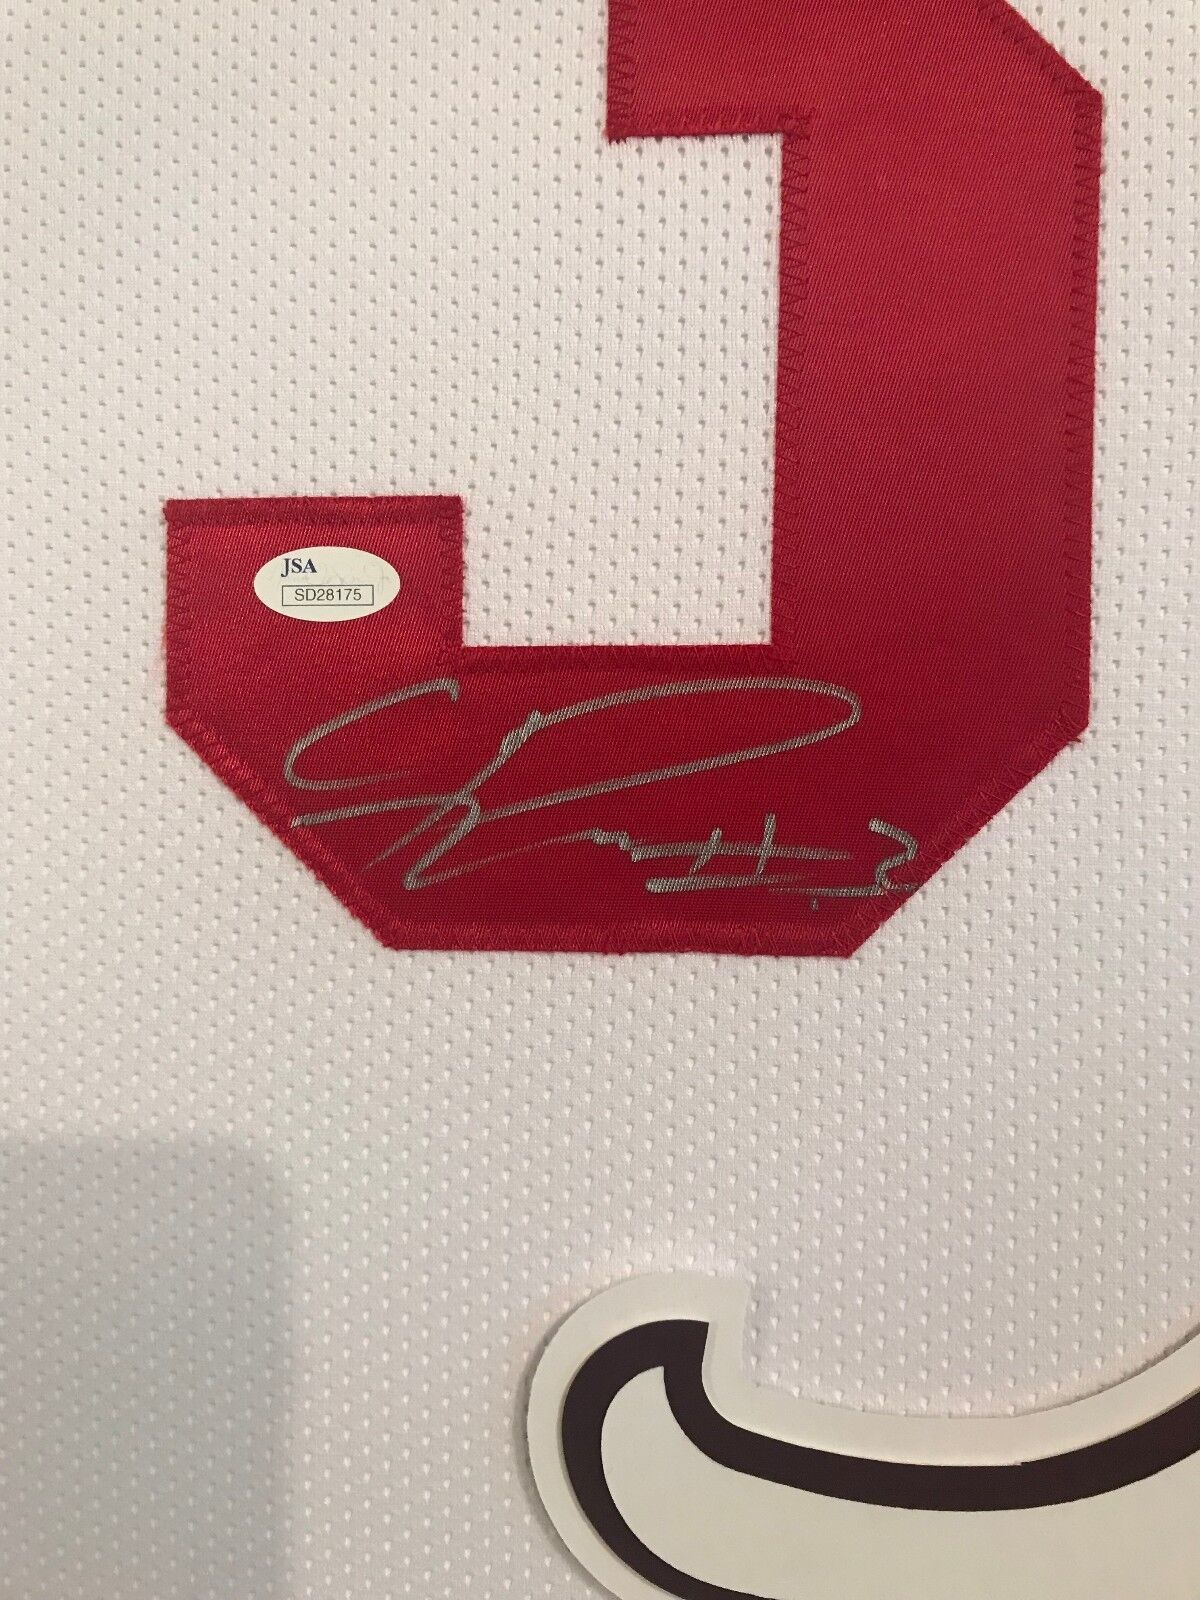 MVP Authentics Framed Calvin Ridley Autographed Signed Alabama Crimson Tide Jersey Jsa Coa 450 sports jersey framing , jersey framing